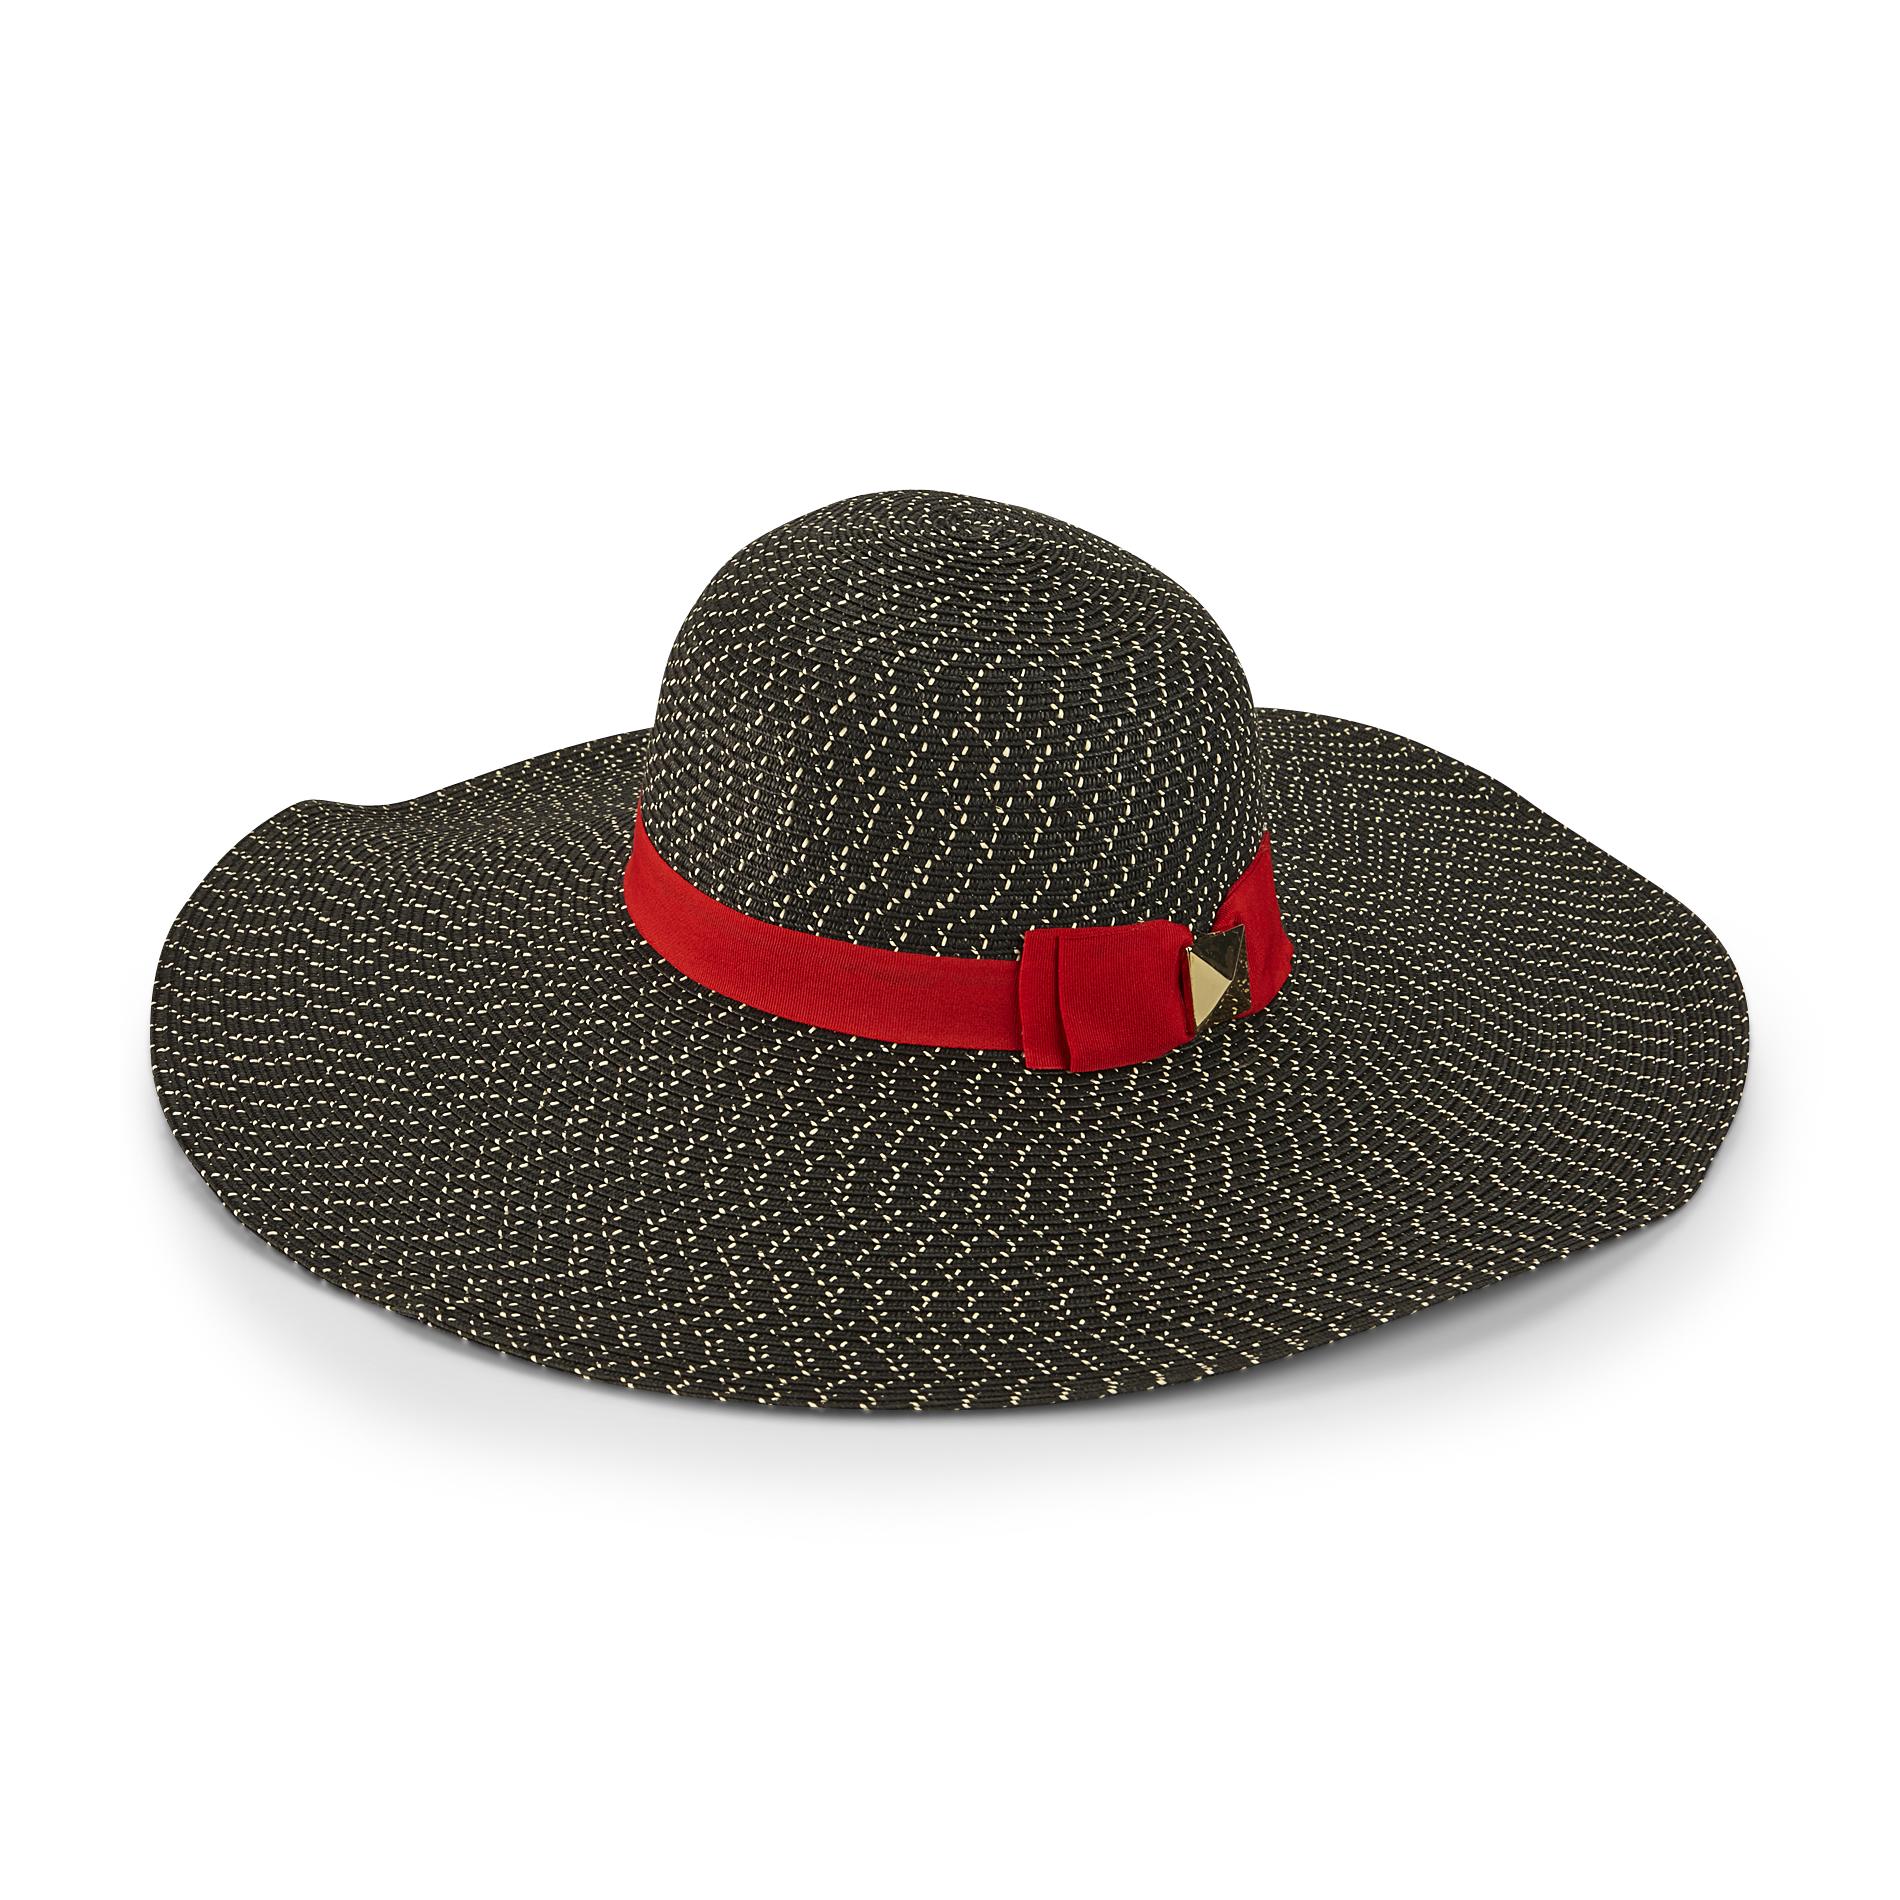 Jaclyn Smith Women's Floppy Straw Hat